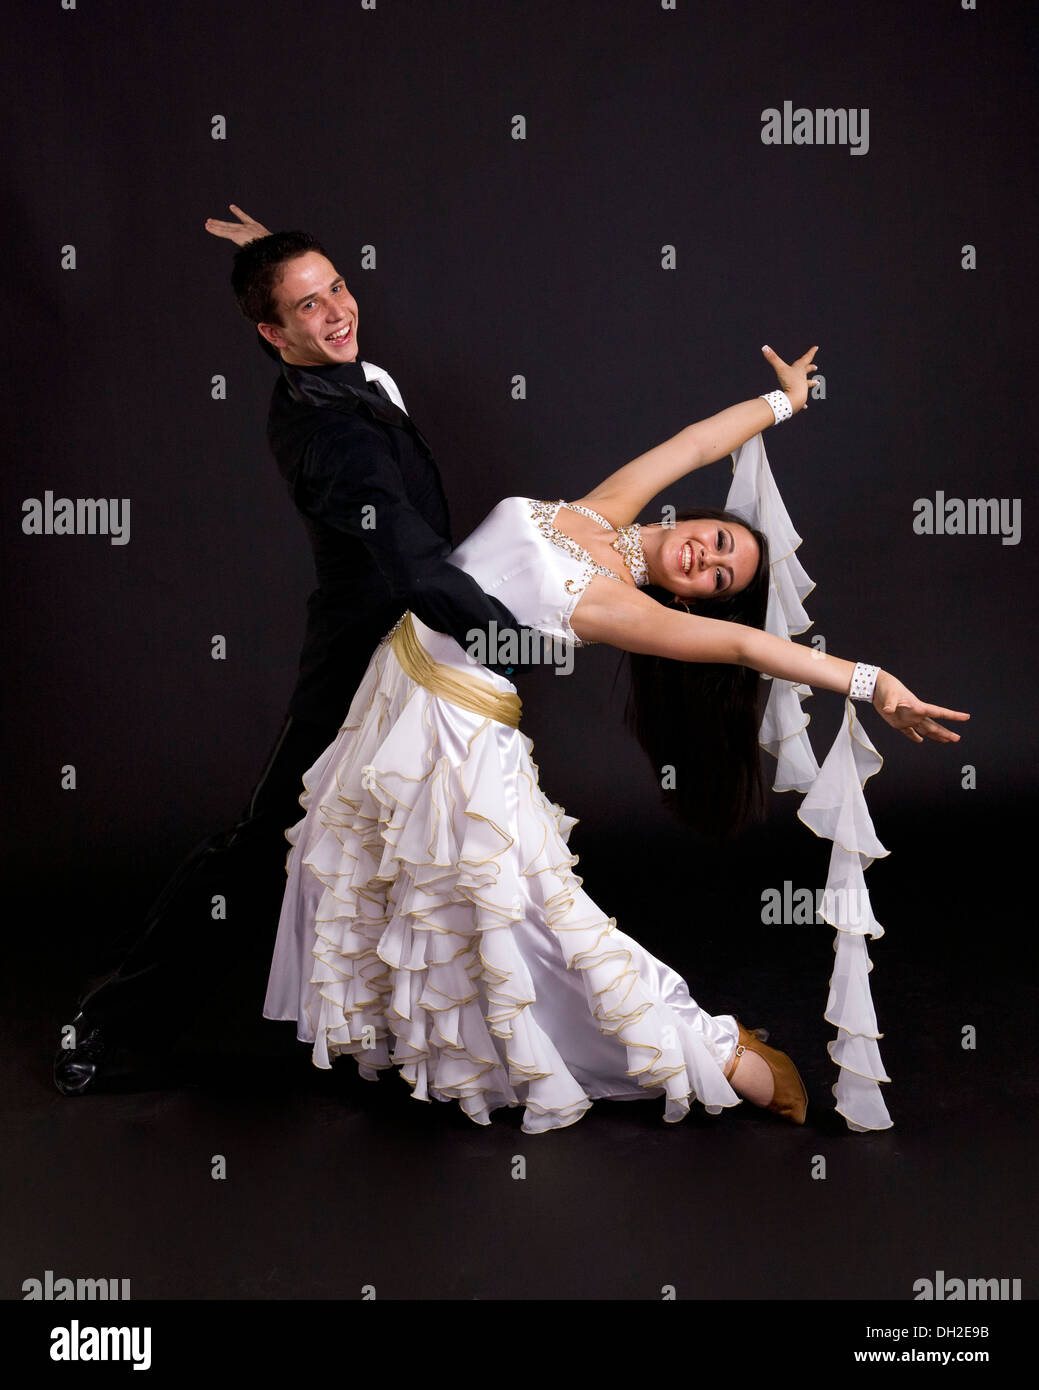 Waltz Dance Styles - Types of Waltz Dance - Waltz Dancing - DanceTime